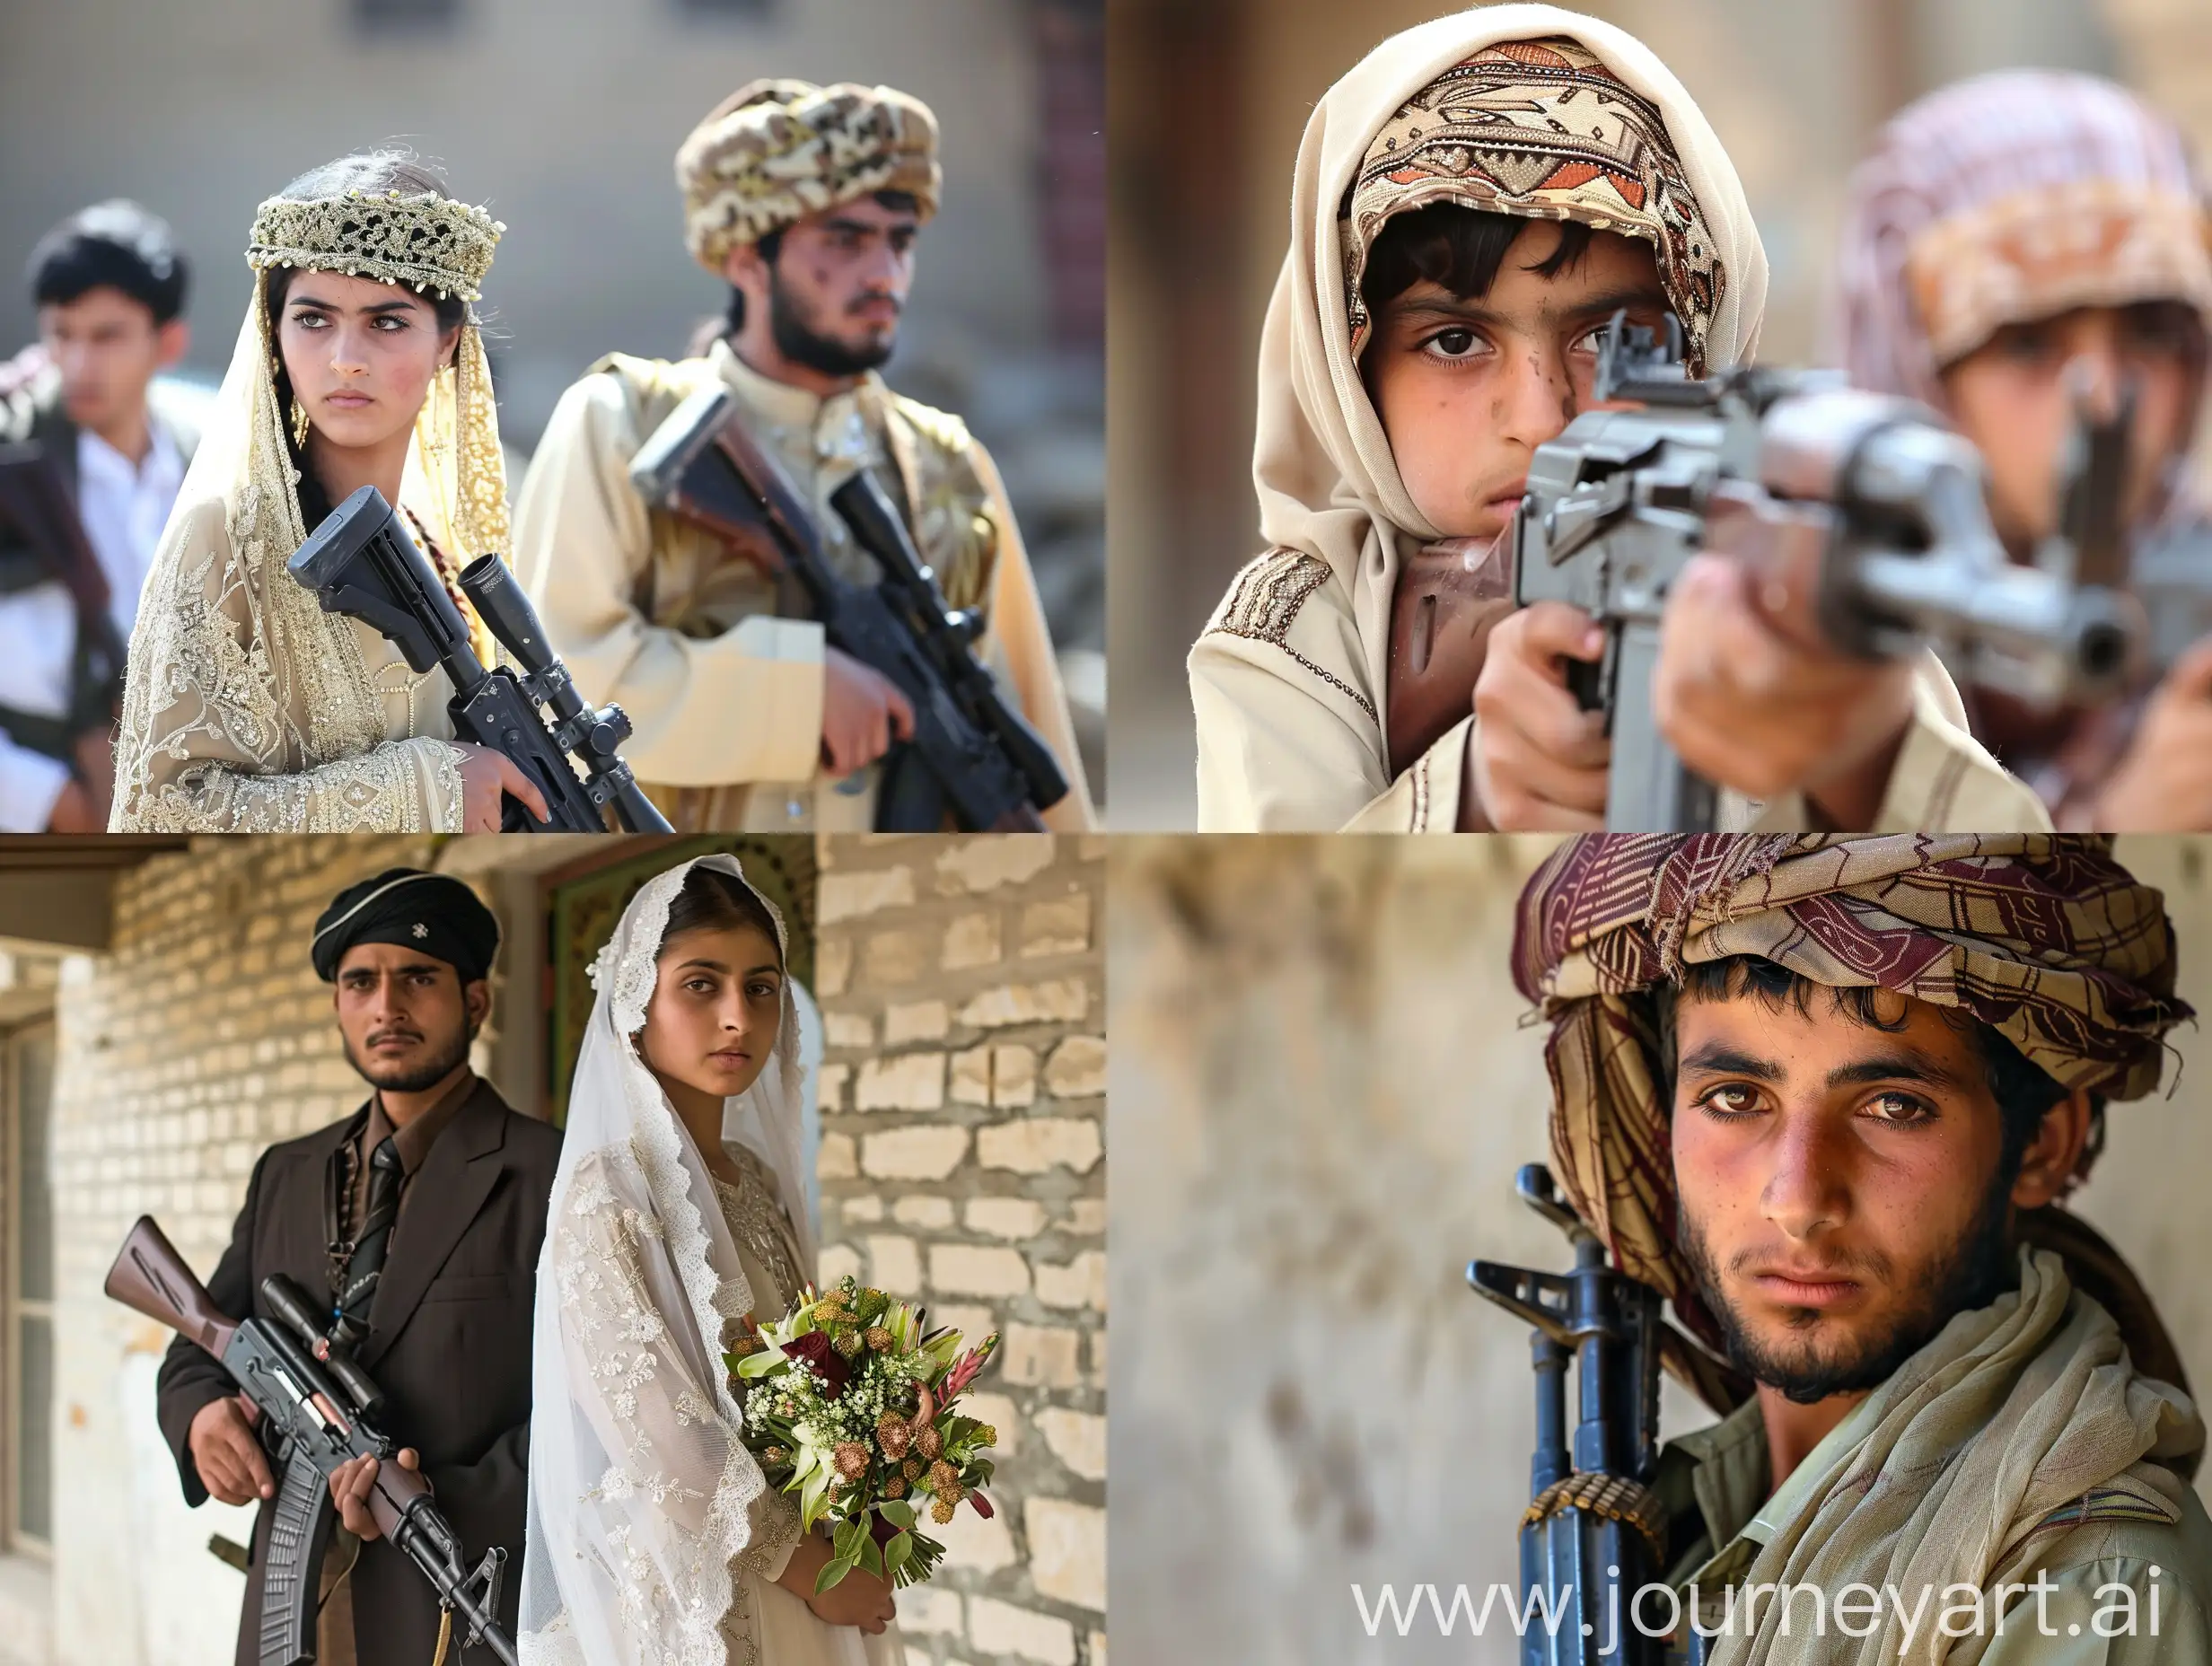 Young Pashto wedding with rifle